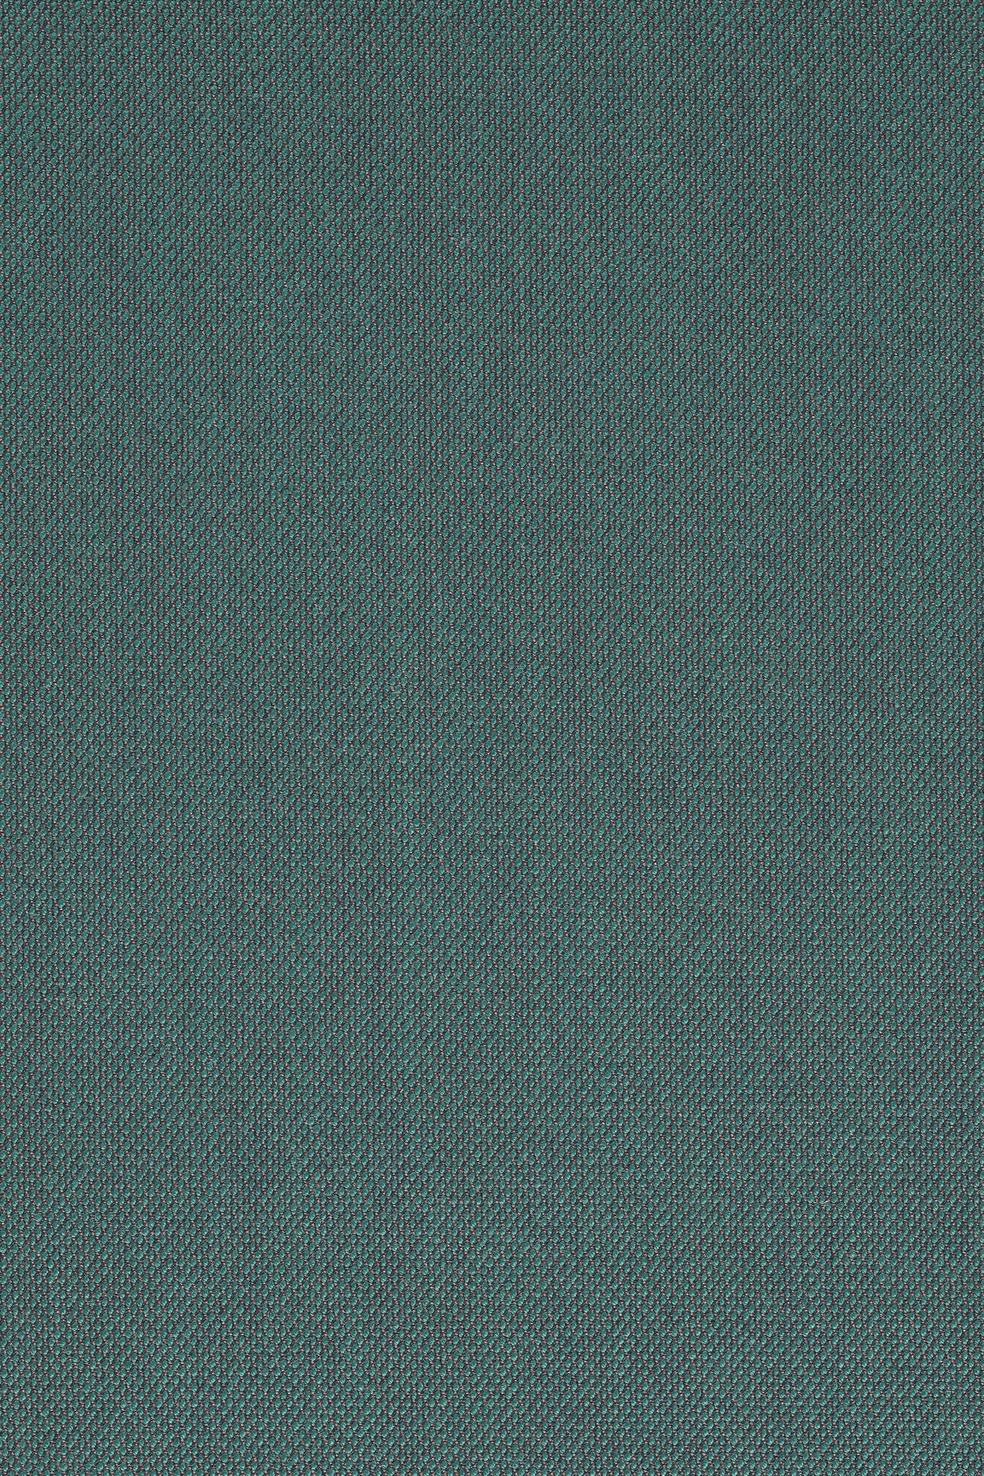 Fabric sample Steelcut Trio 3 996 blue